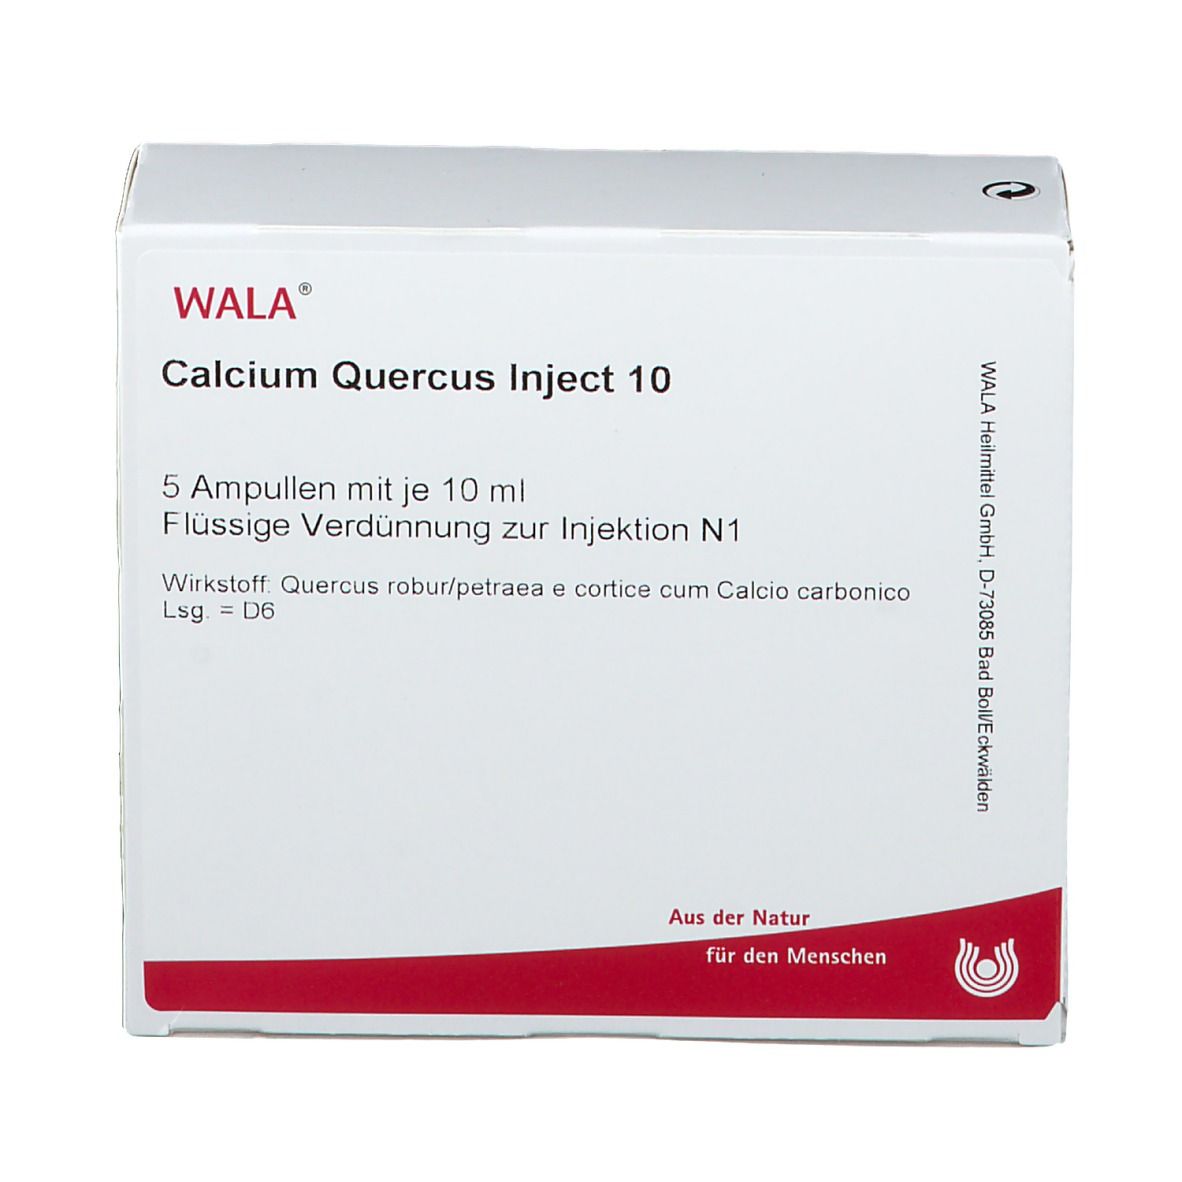 WALA® Calcium Quercus Inject 10 Ampullen